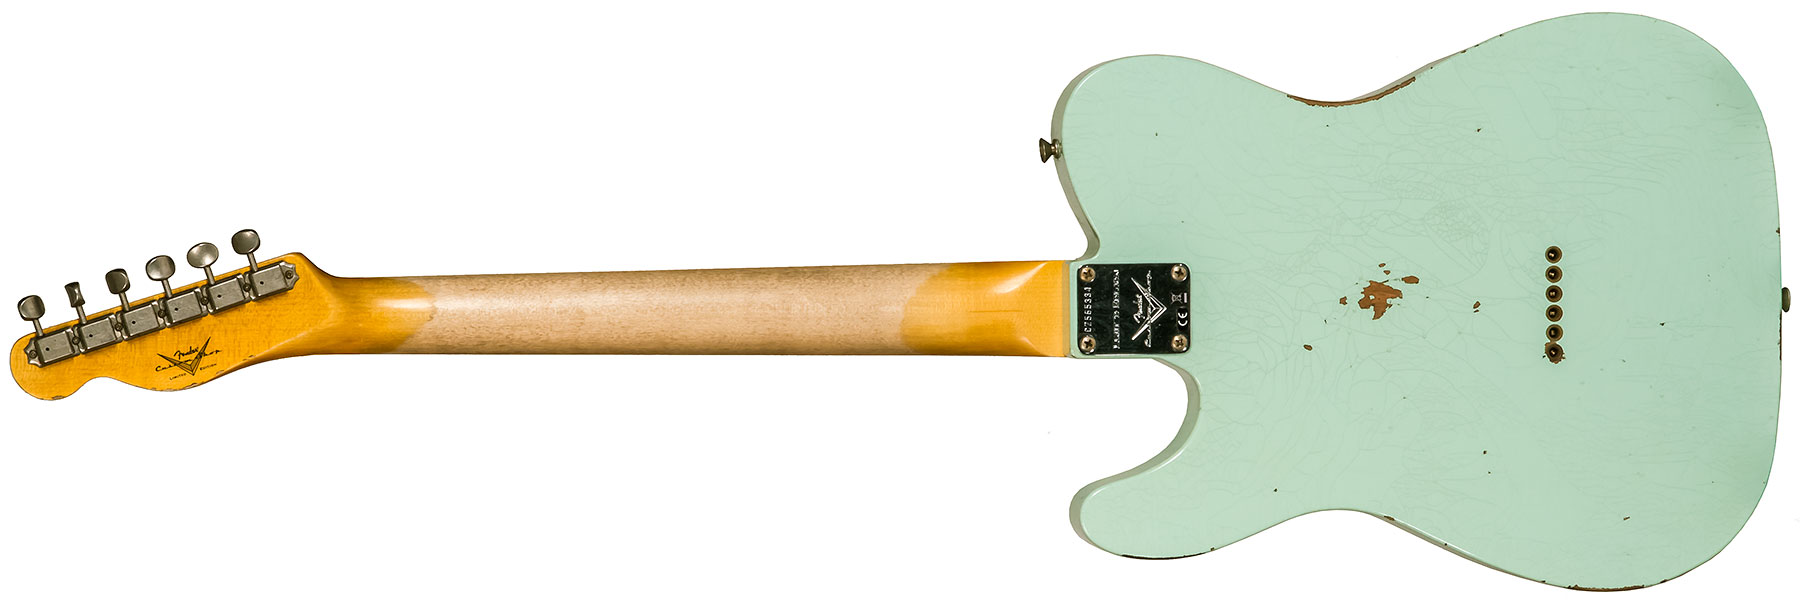 Fender Custom Shop Tele 1961 2s Ht Rw #cz565334 - Relic Faded Surf Green - Guitare Électrique Forme Tel - Variation 1